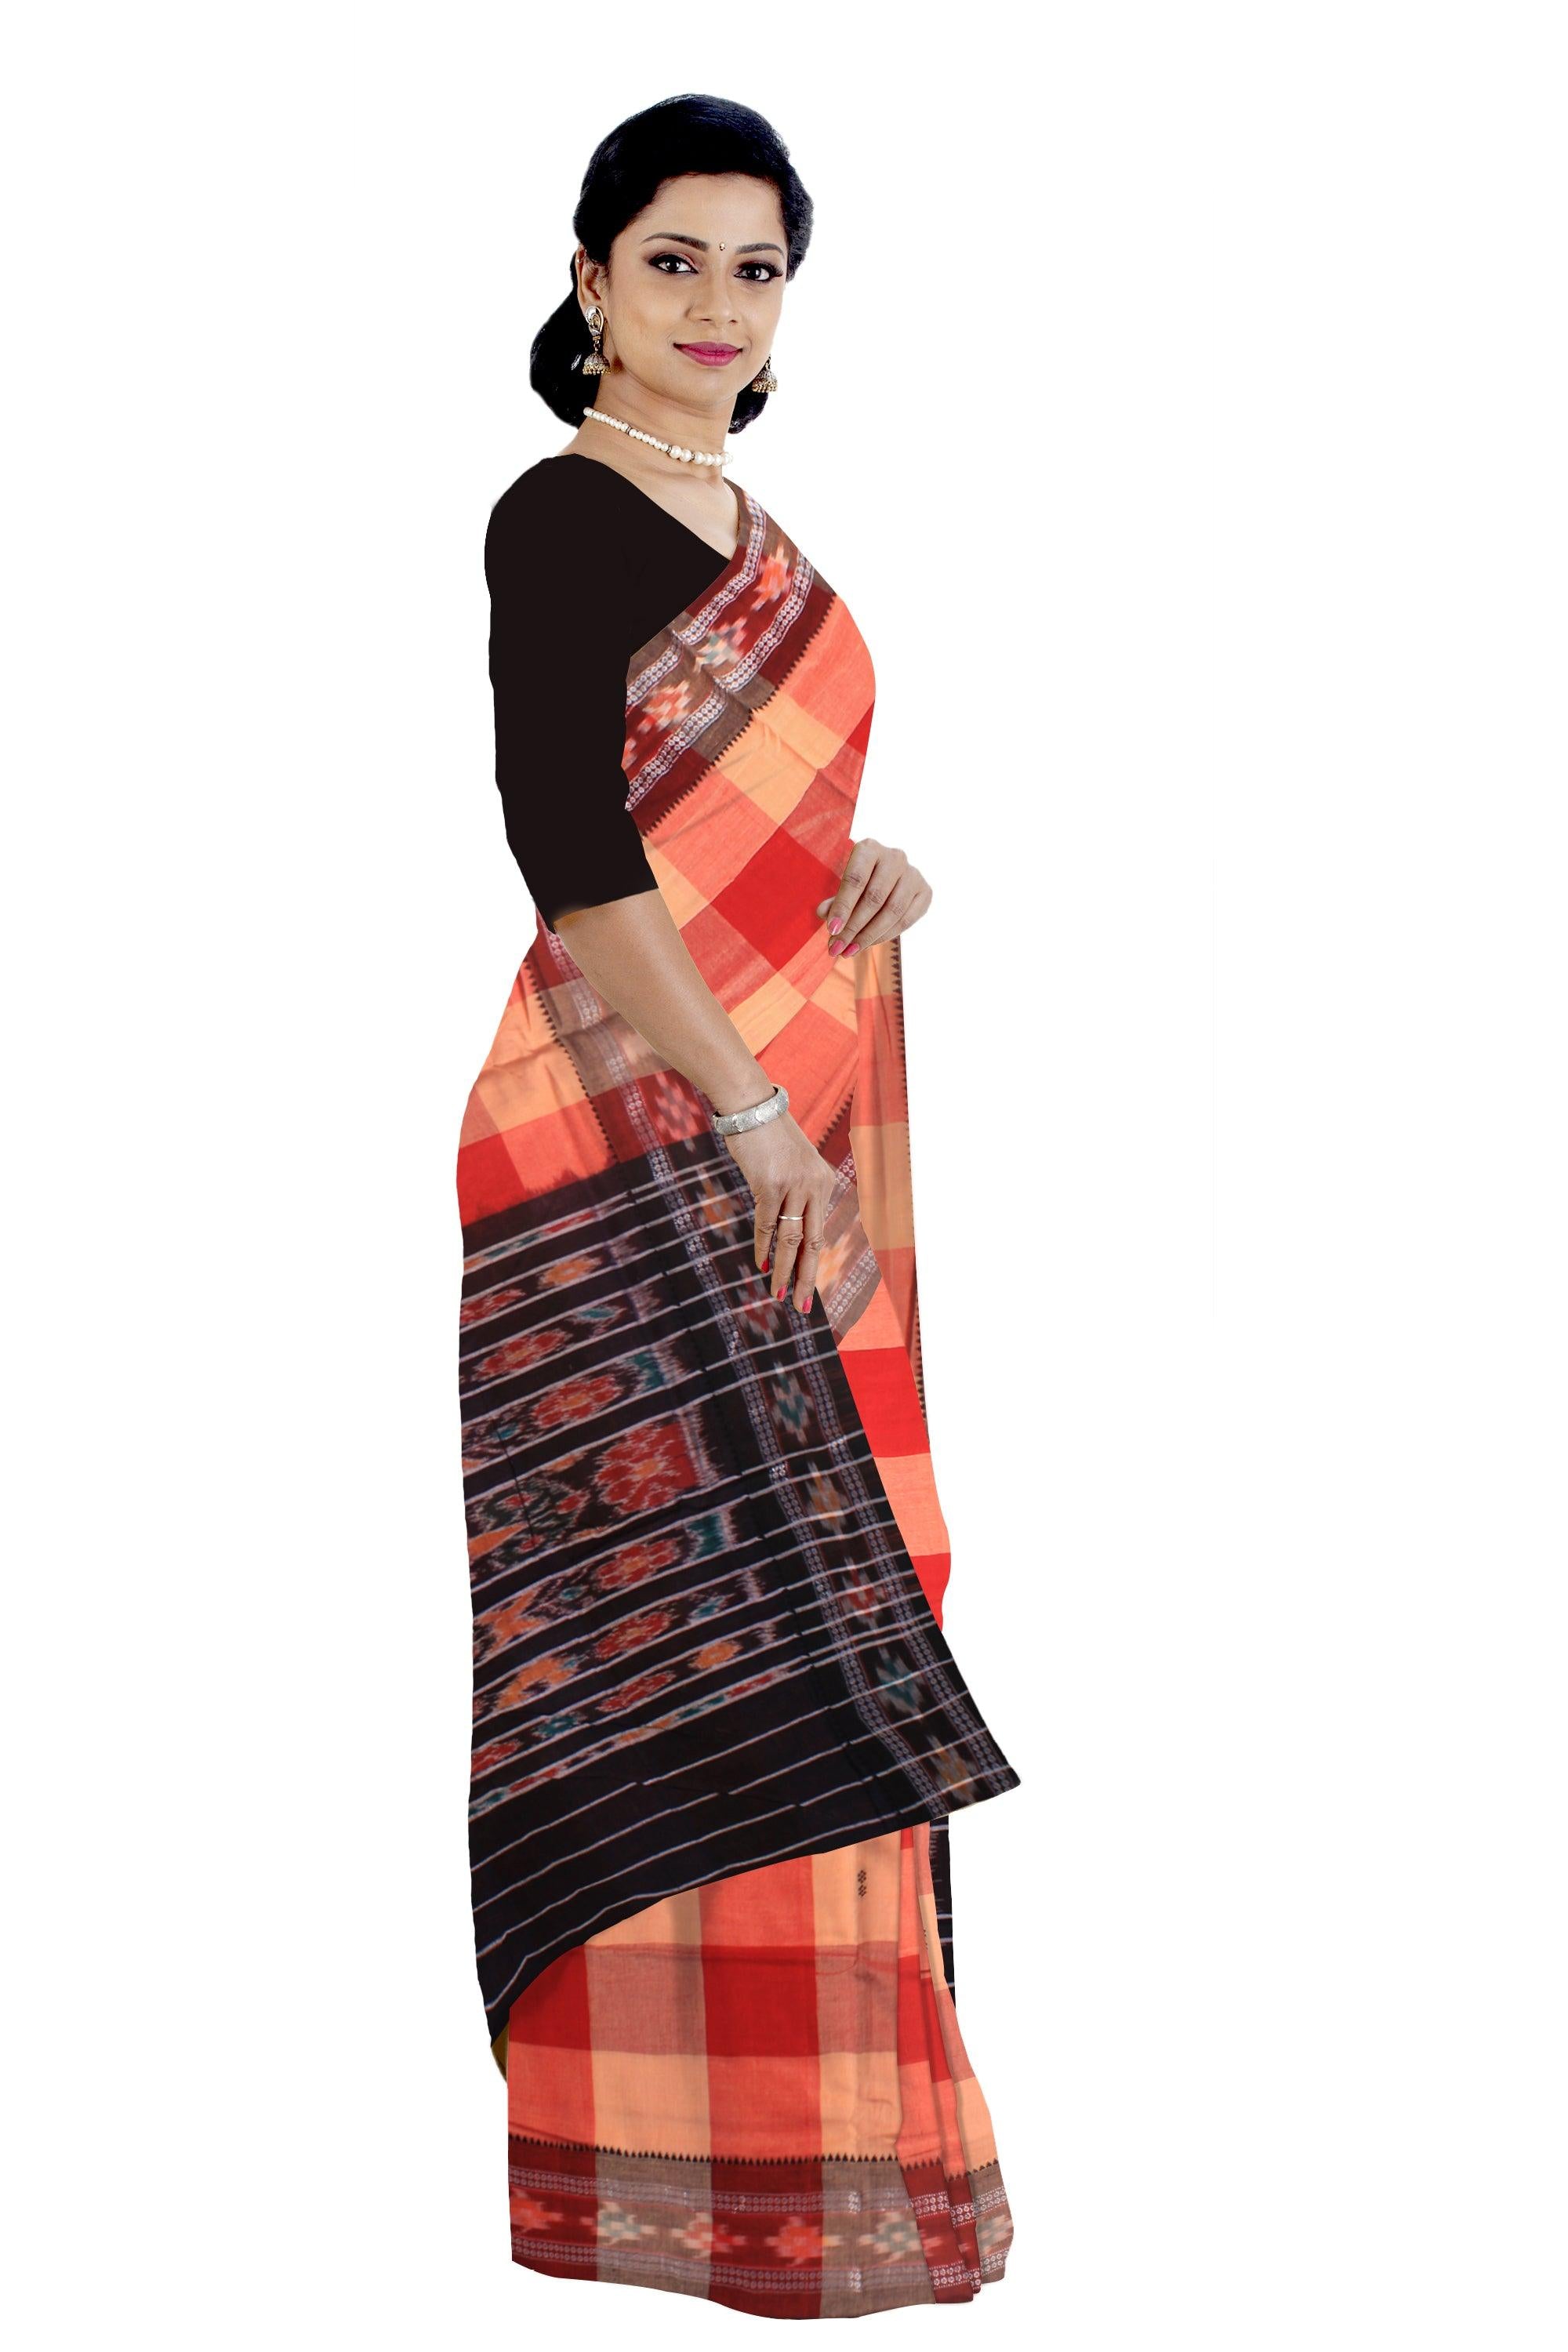 Sambalpuri Cotton saree in Red and Orange color with avaliable blouse piece. - Koshali Arts & Crafts Enterprise